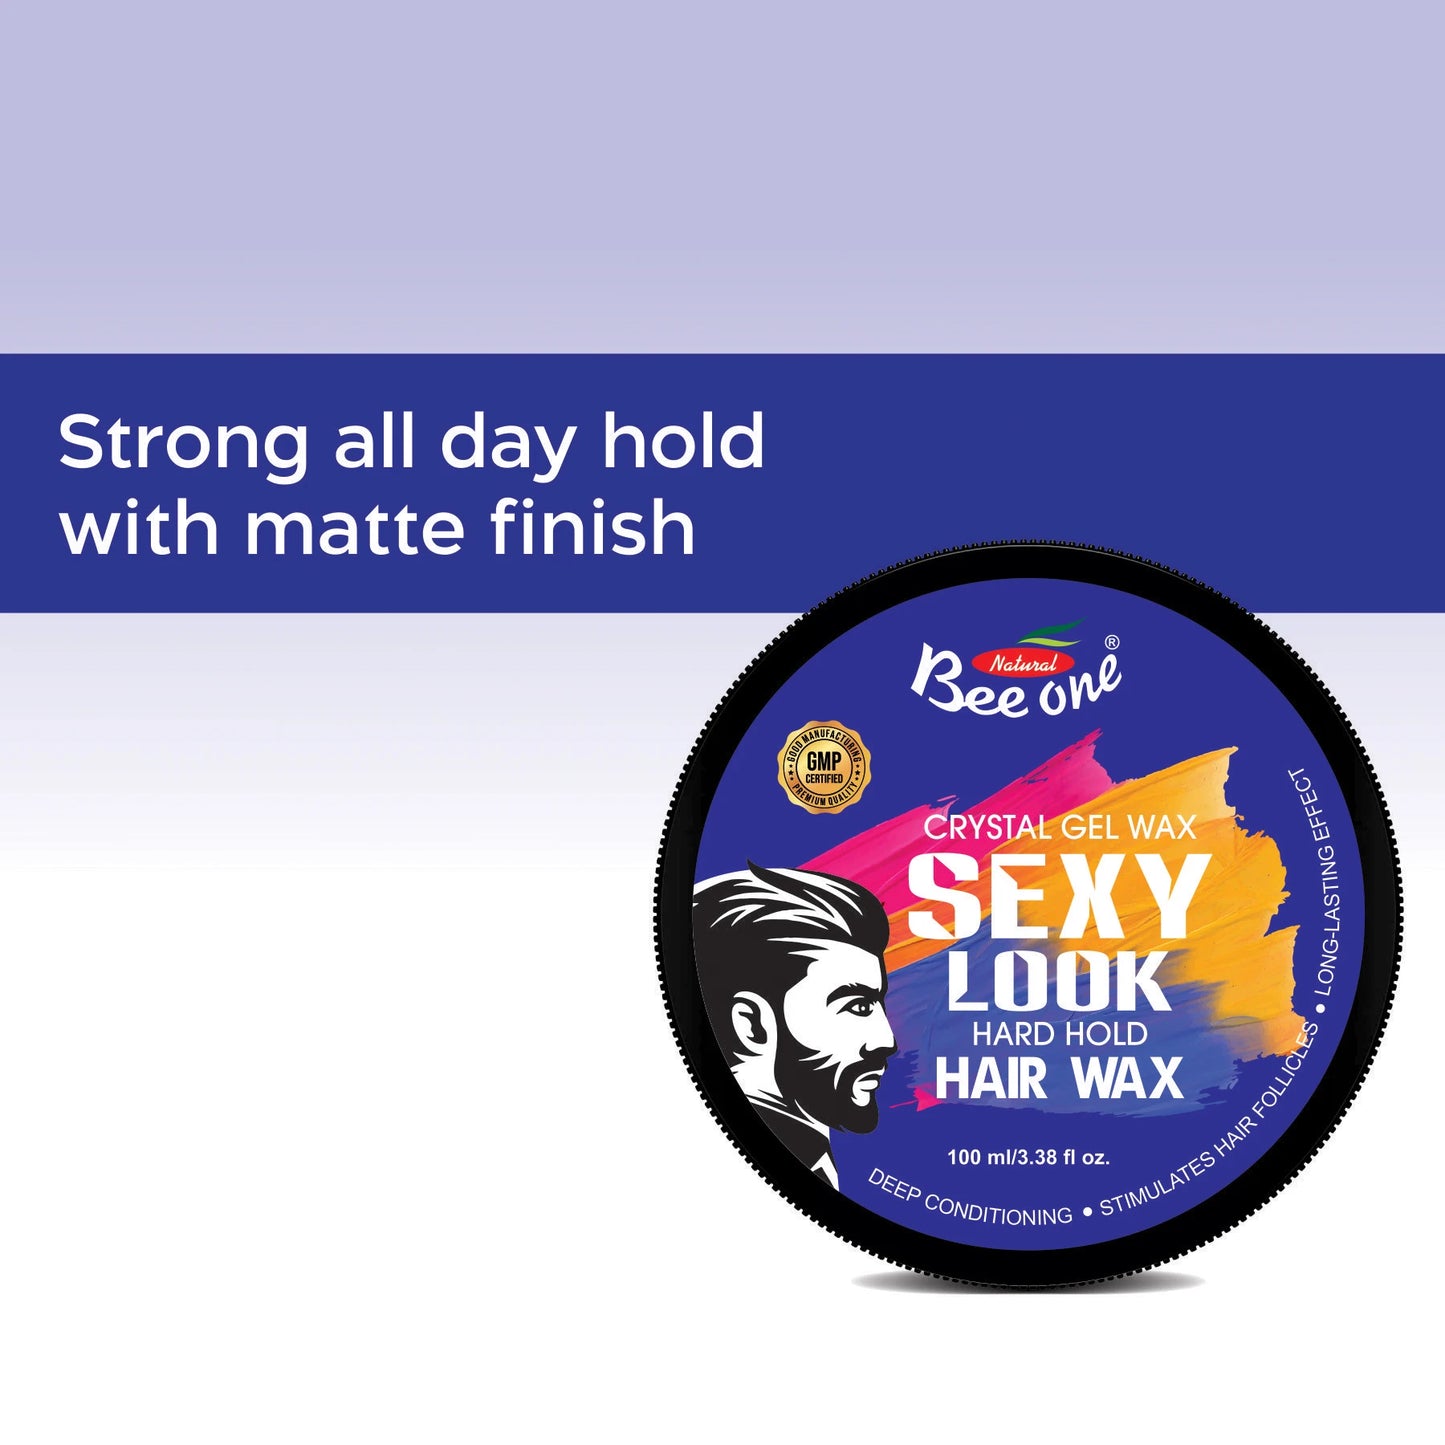 SEXY LOOK STYLING HAIR WAX